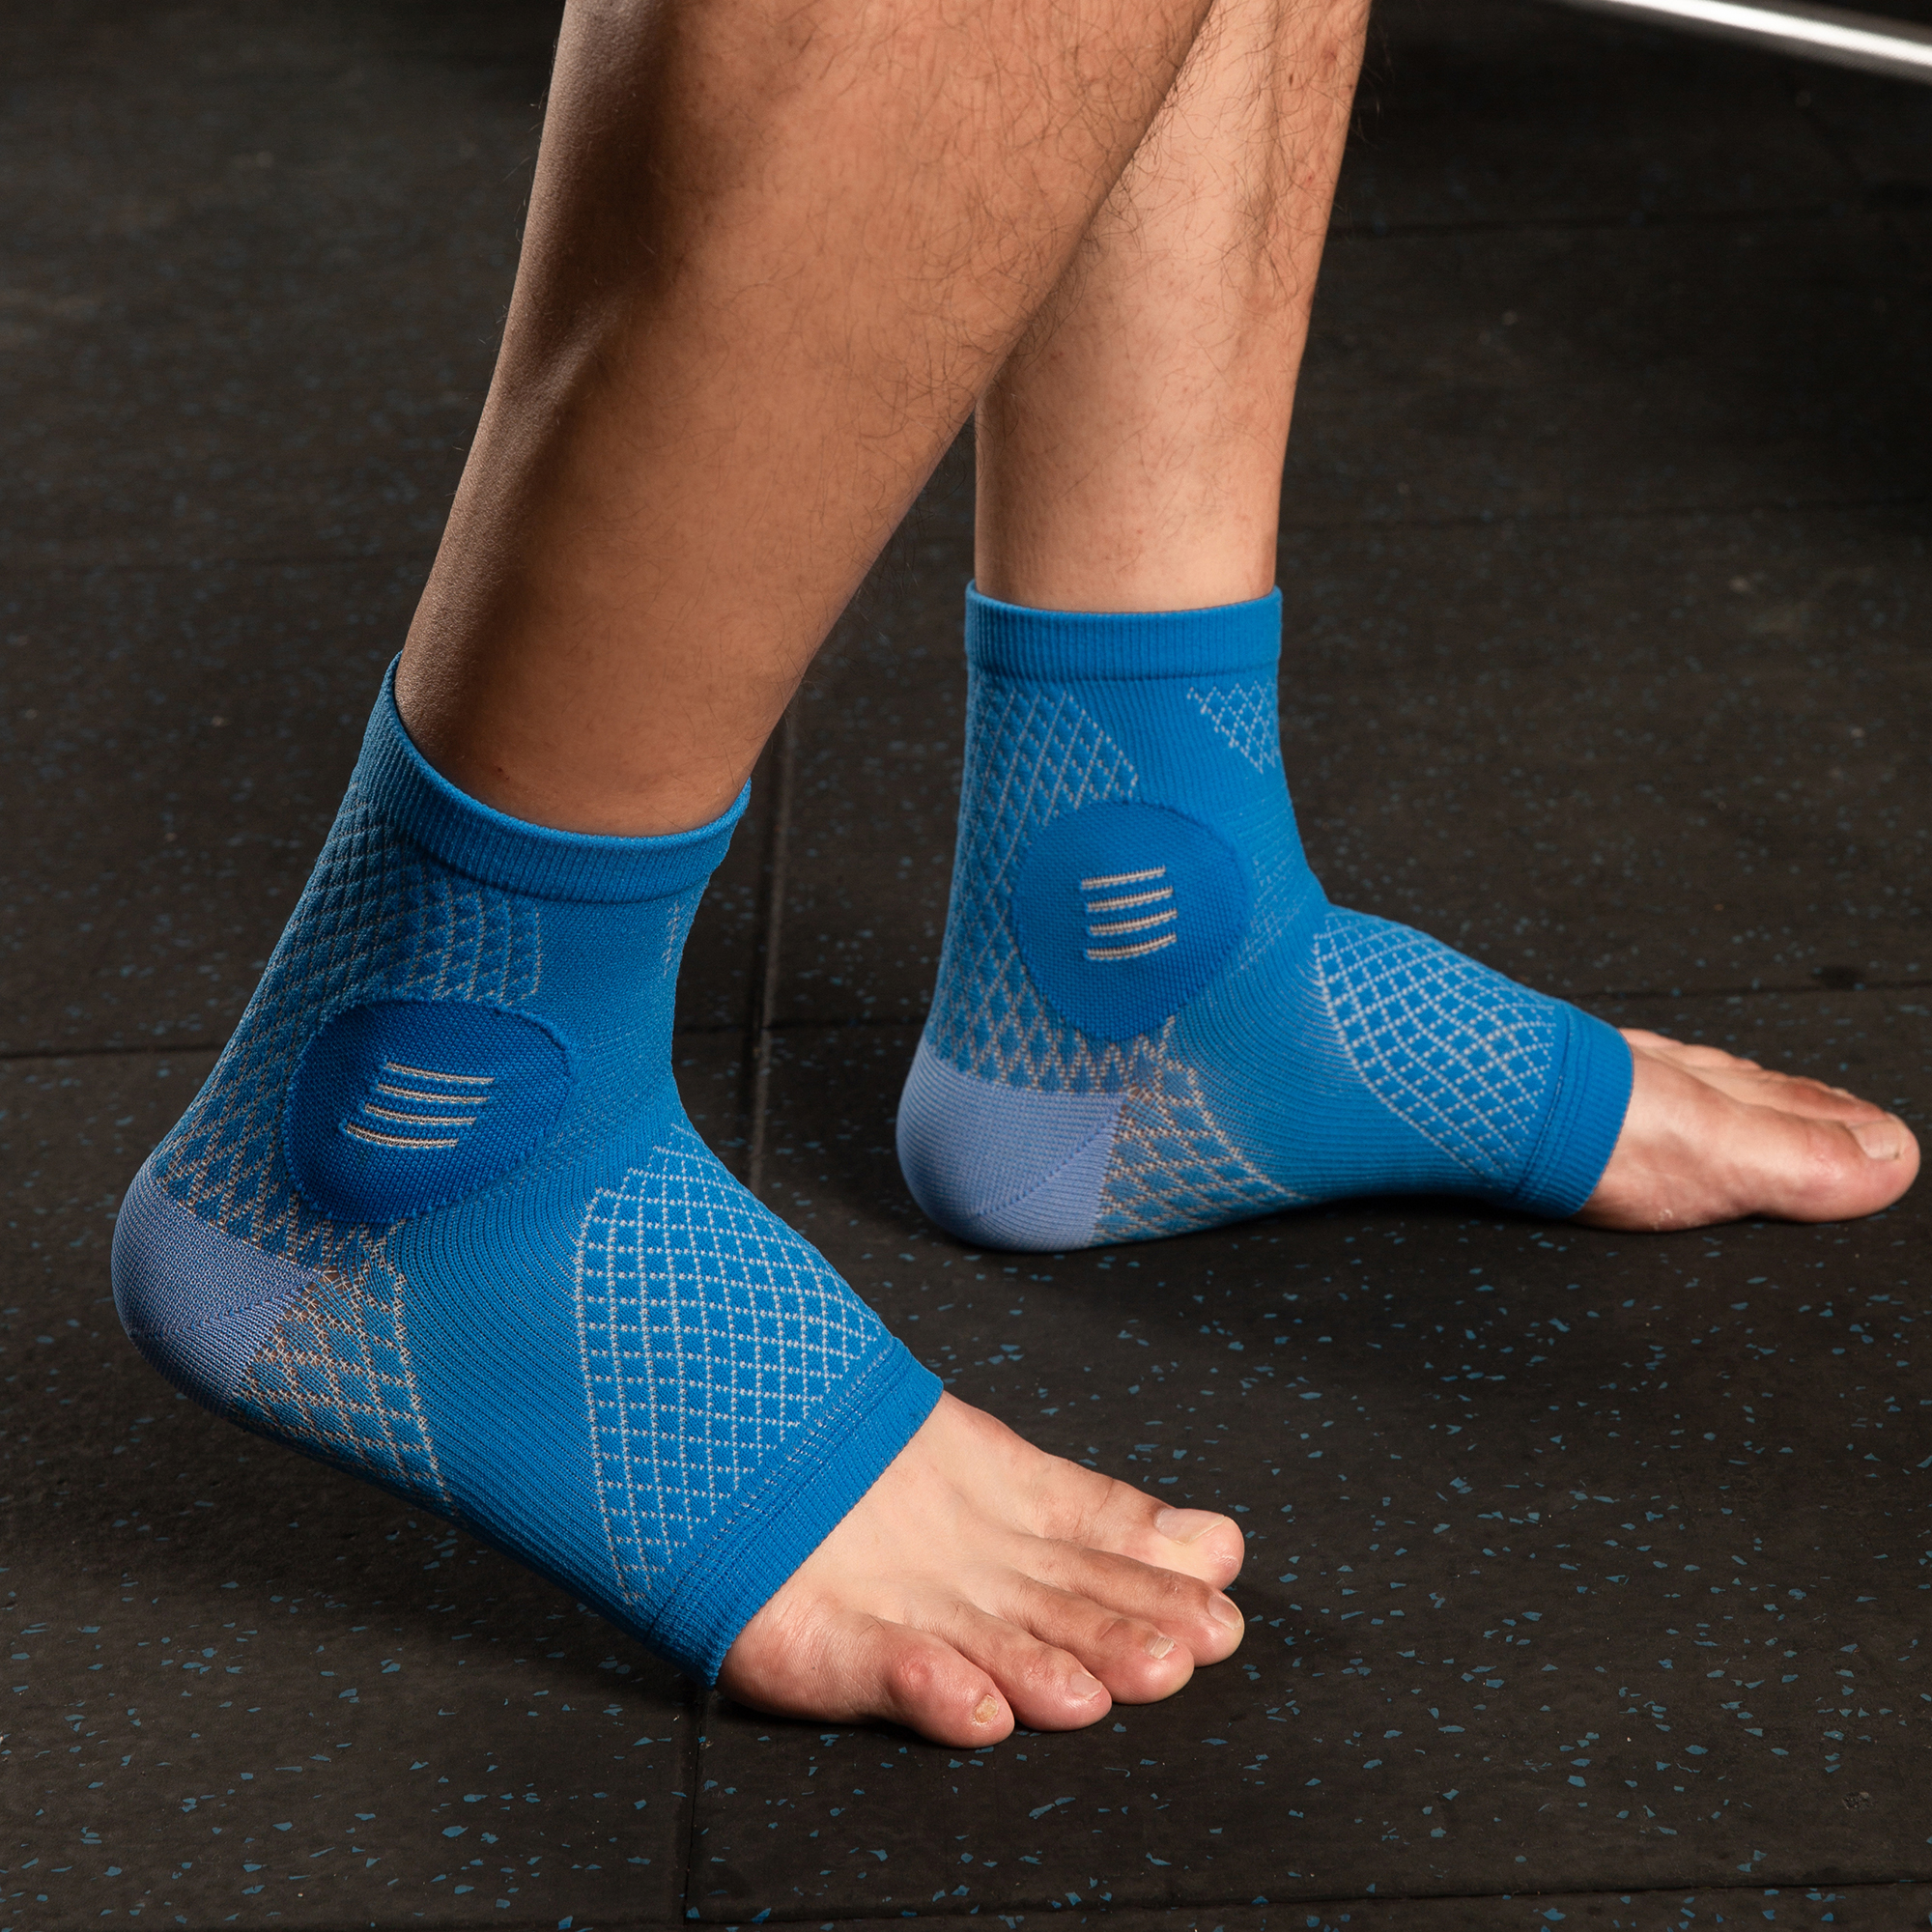 Lowest Price for Arm Sling Shoulder Immobilizer - Plantar Fasciitis Socks for Women & Men – Best Foot & Ankle Compression Sleeve, Brace for Everyday Use – Provides Arch Support...